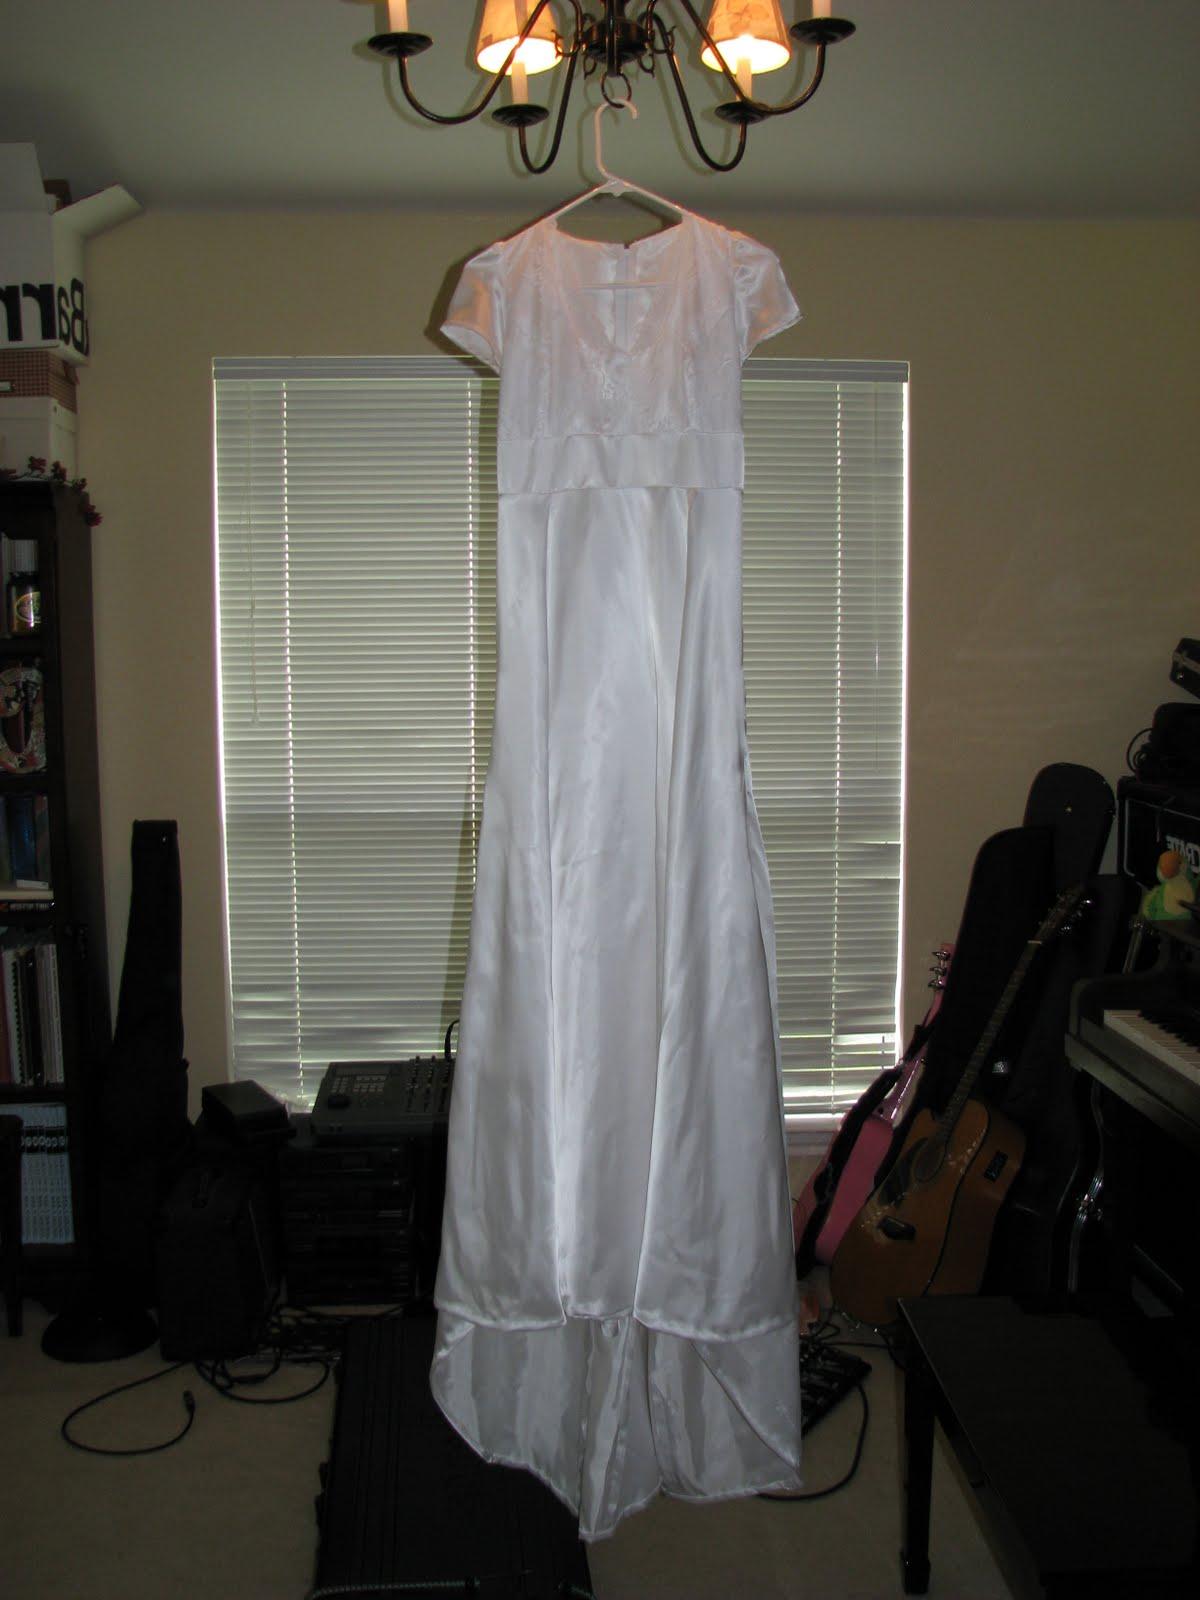 It was my first wedding dress.